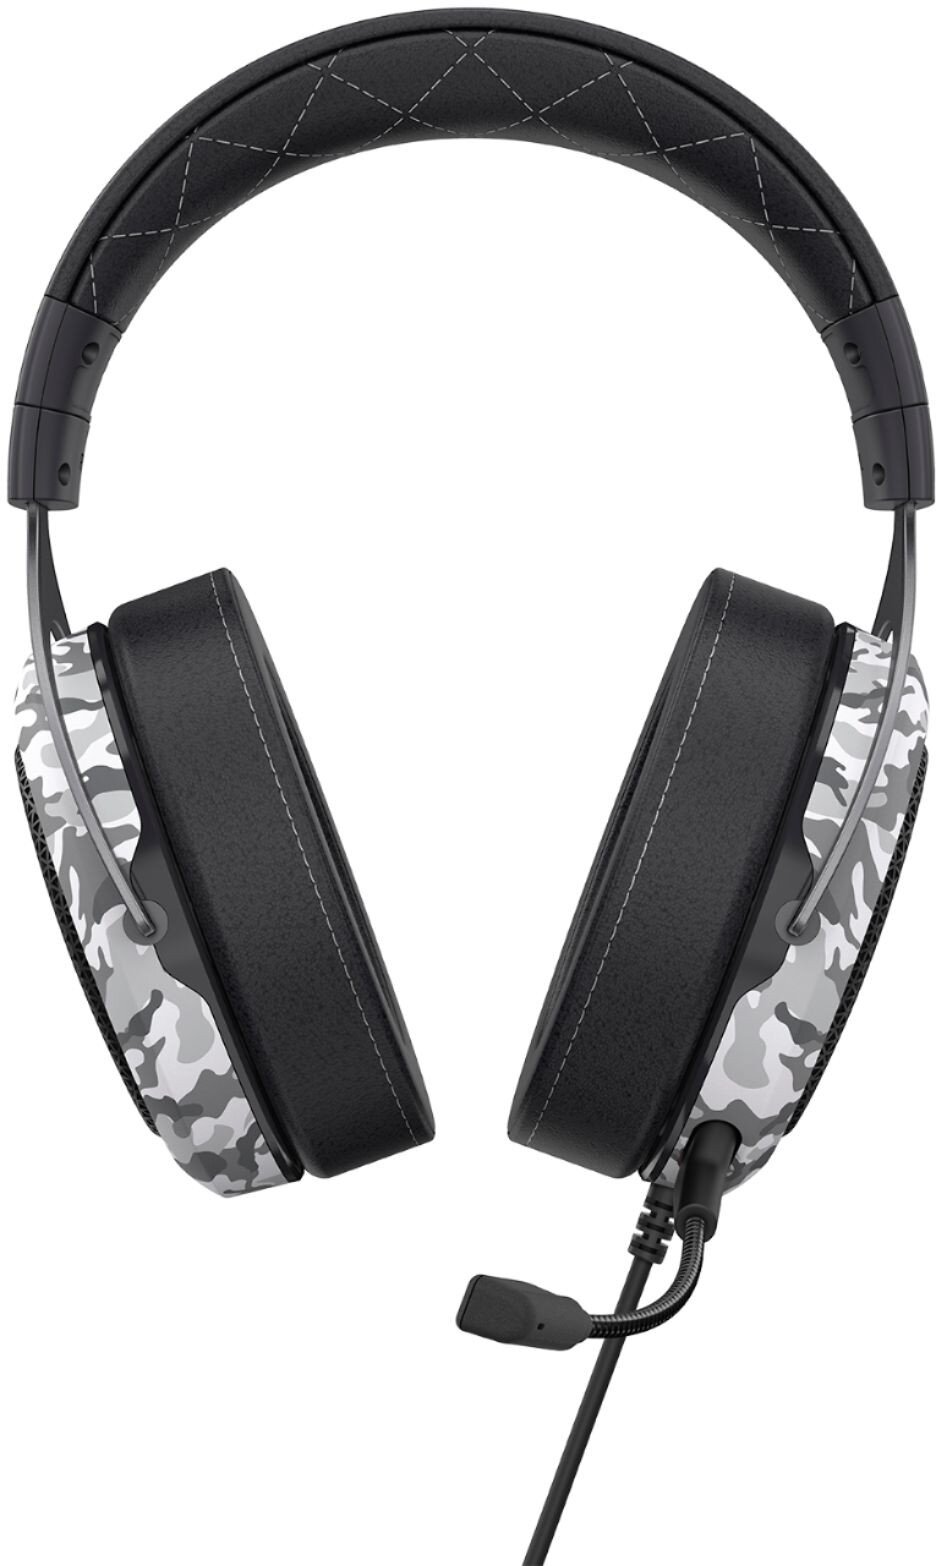 Buy Corsair Worldwide Headset HS60 Haptic online Gaming Stereo